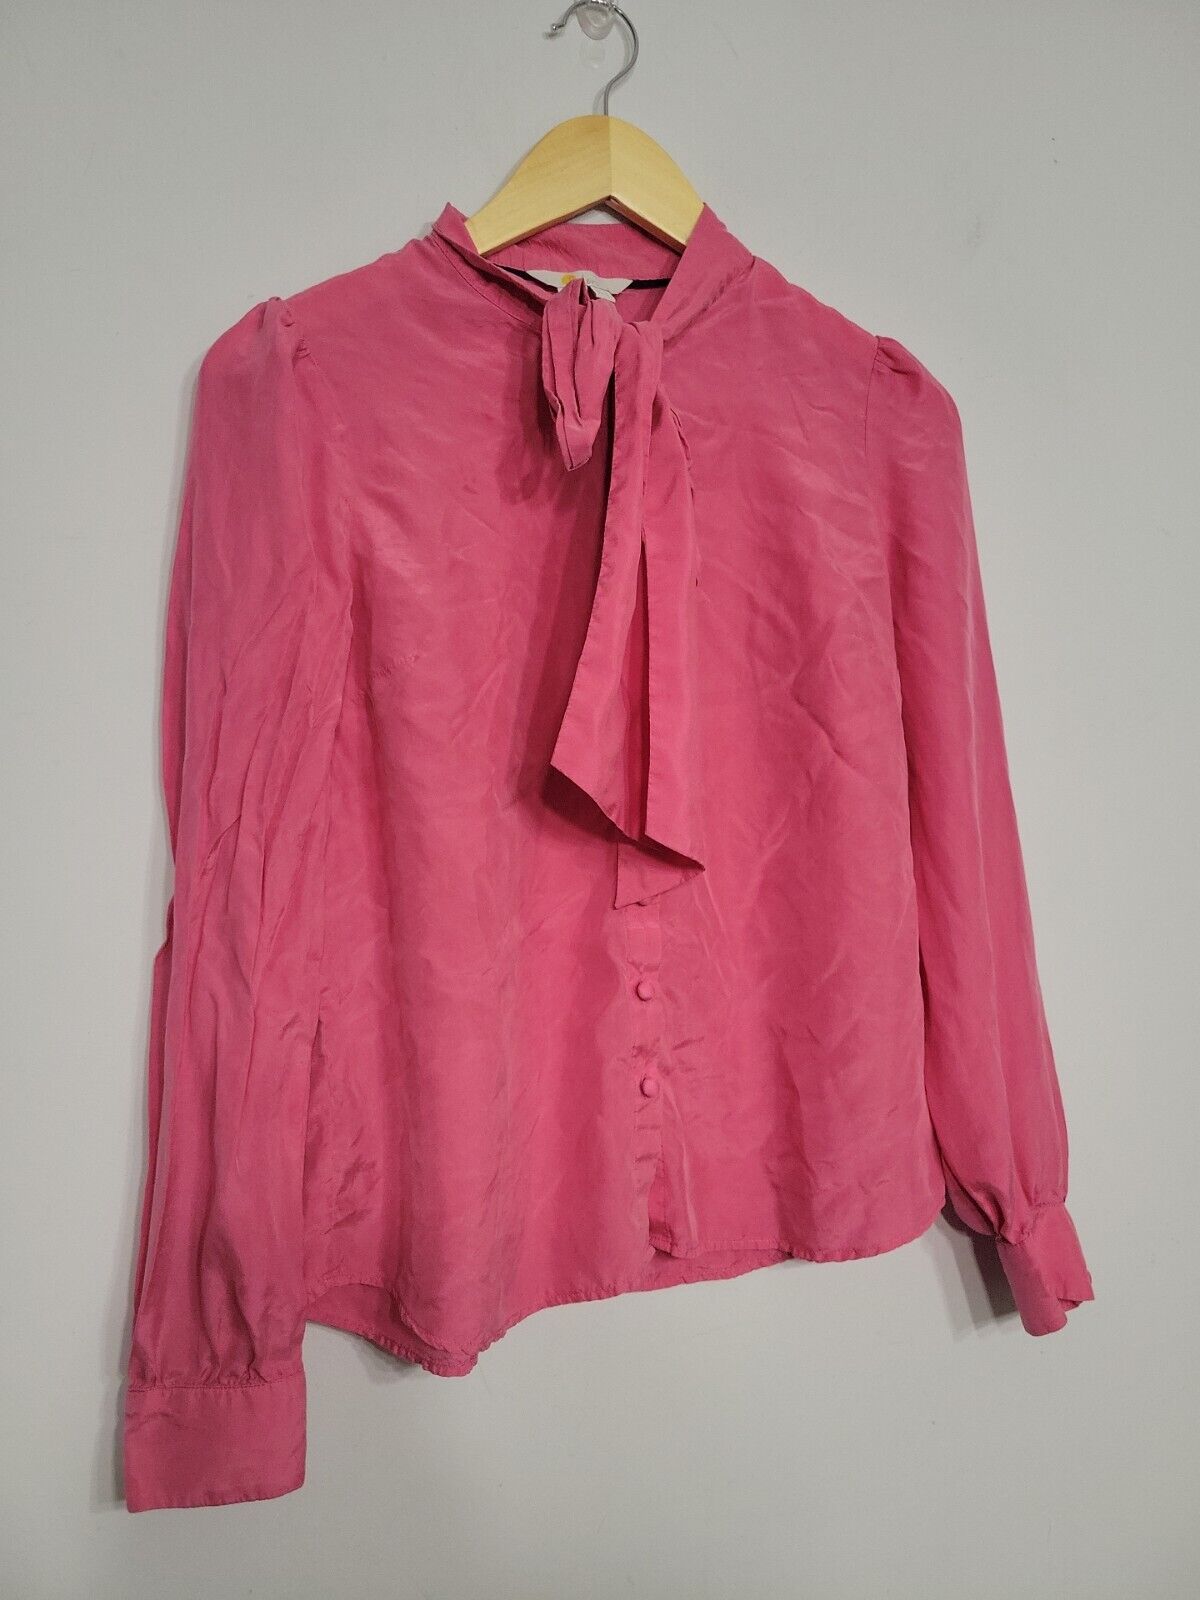 Boden Women's Top Size 8 Medium Pink Long Sleeve … - image 2